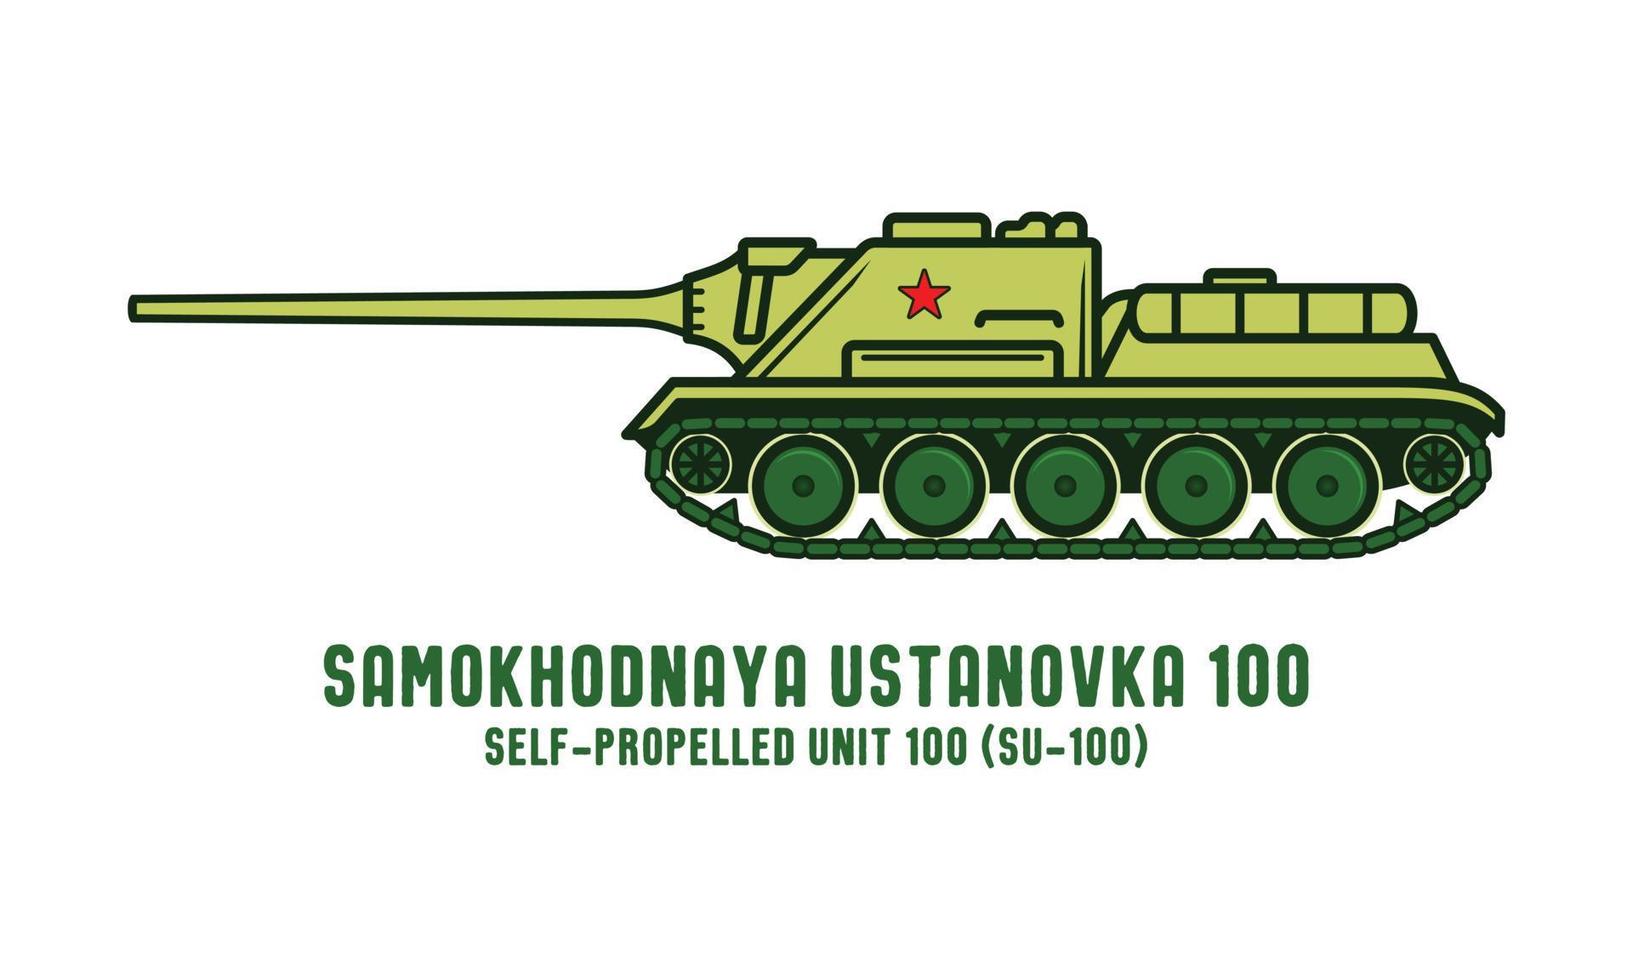 world war 2 samokhodnaya ustanovka 100 military russian tank vector